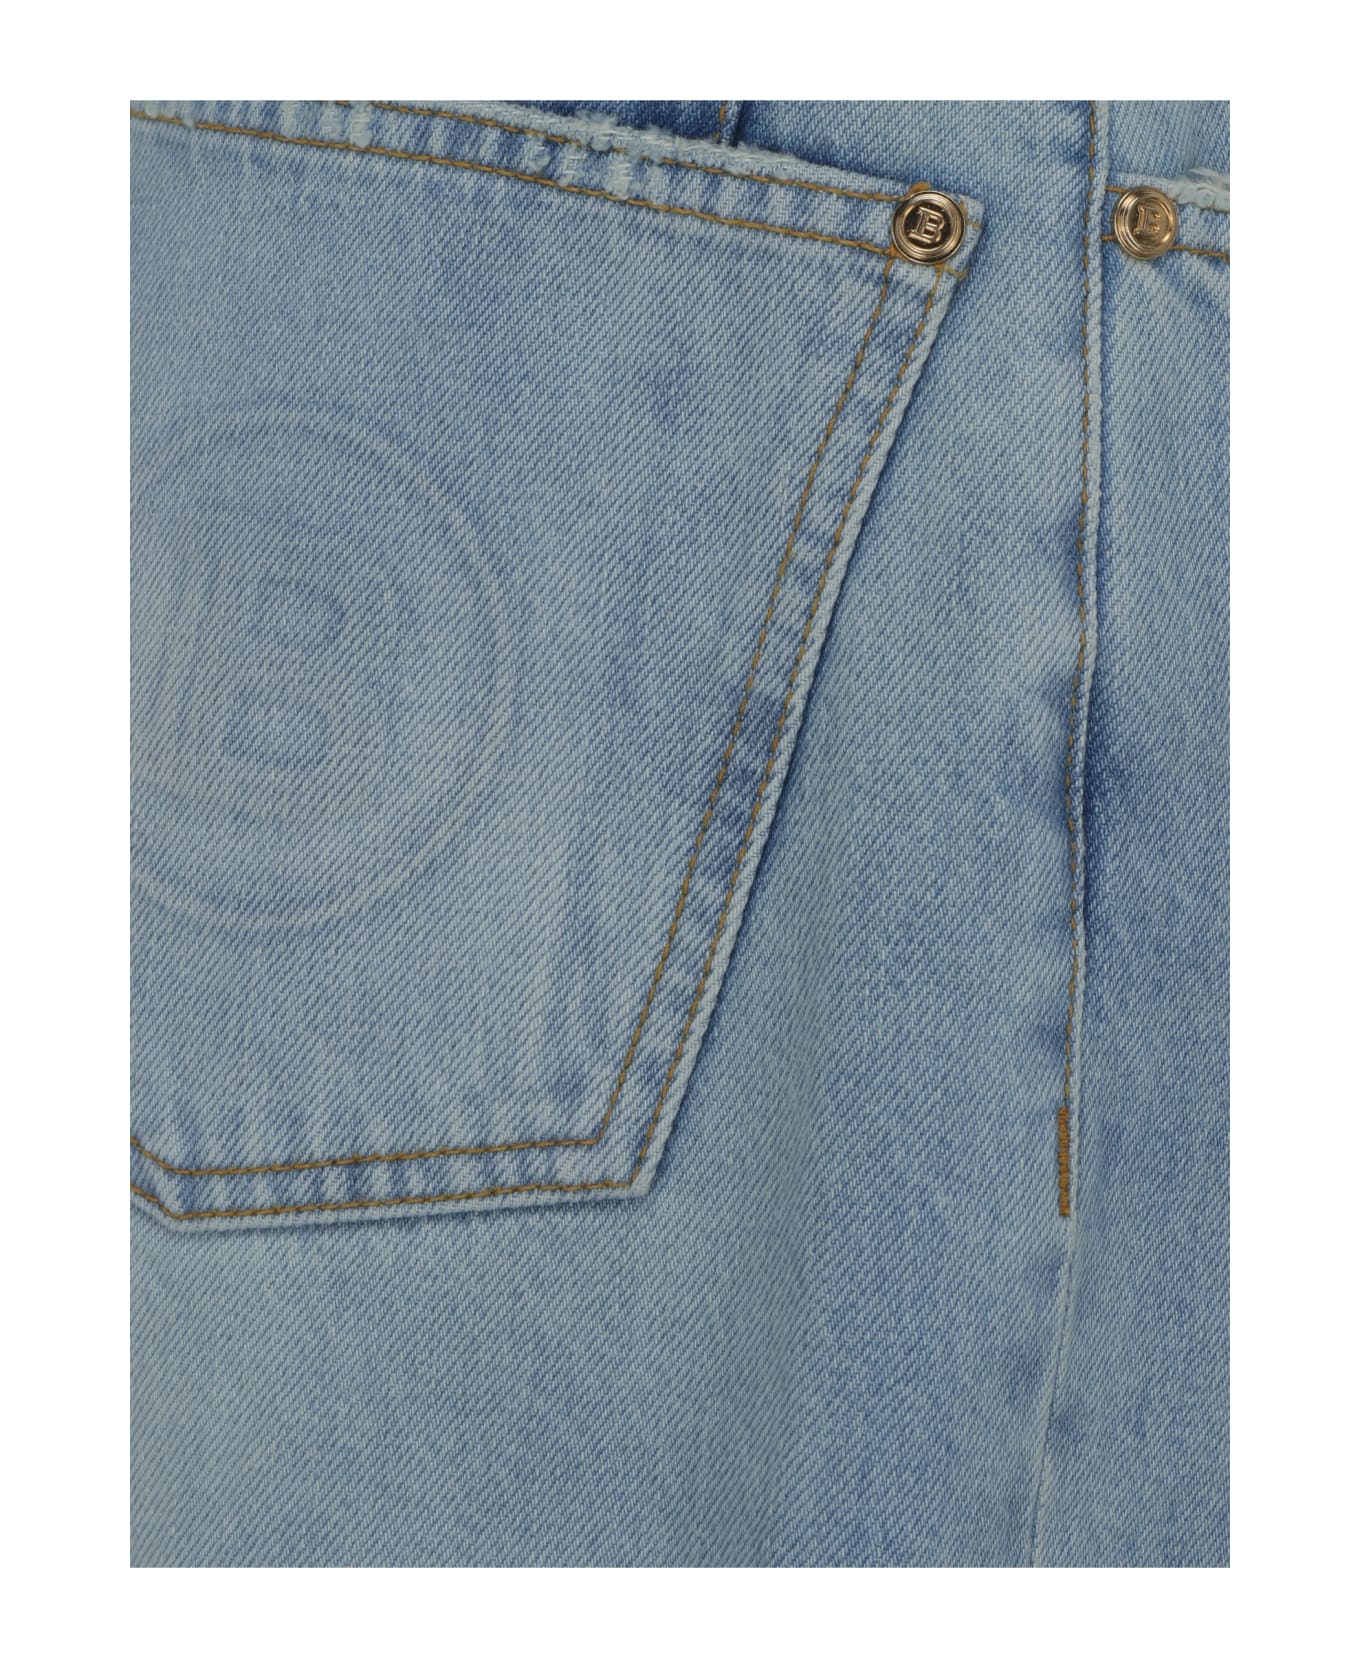 Balmain Boyfriend Jeans - Balmain Kids embroidered logo cargo shorts